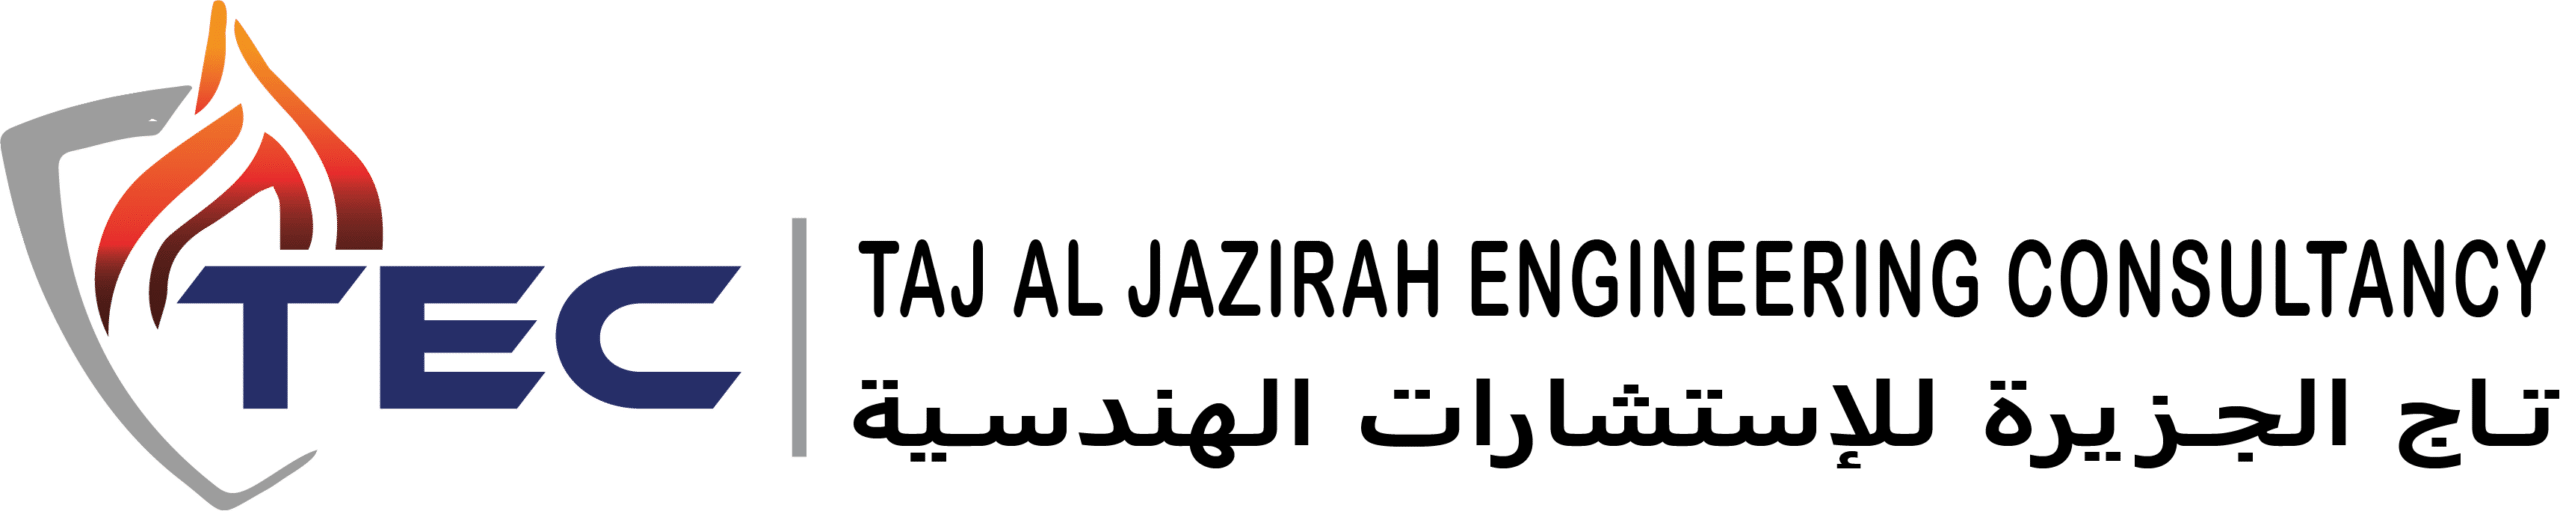 TEC Fire – Taj Al Jazirah Engineering Consultancy Logo